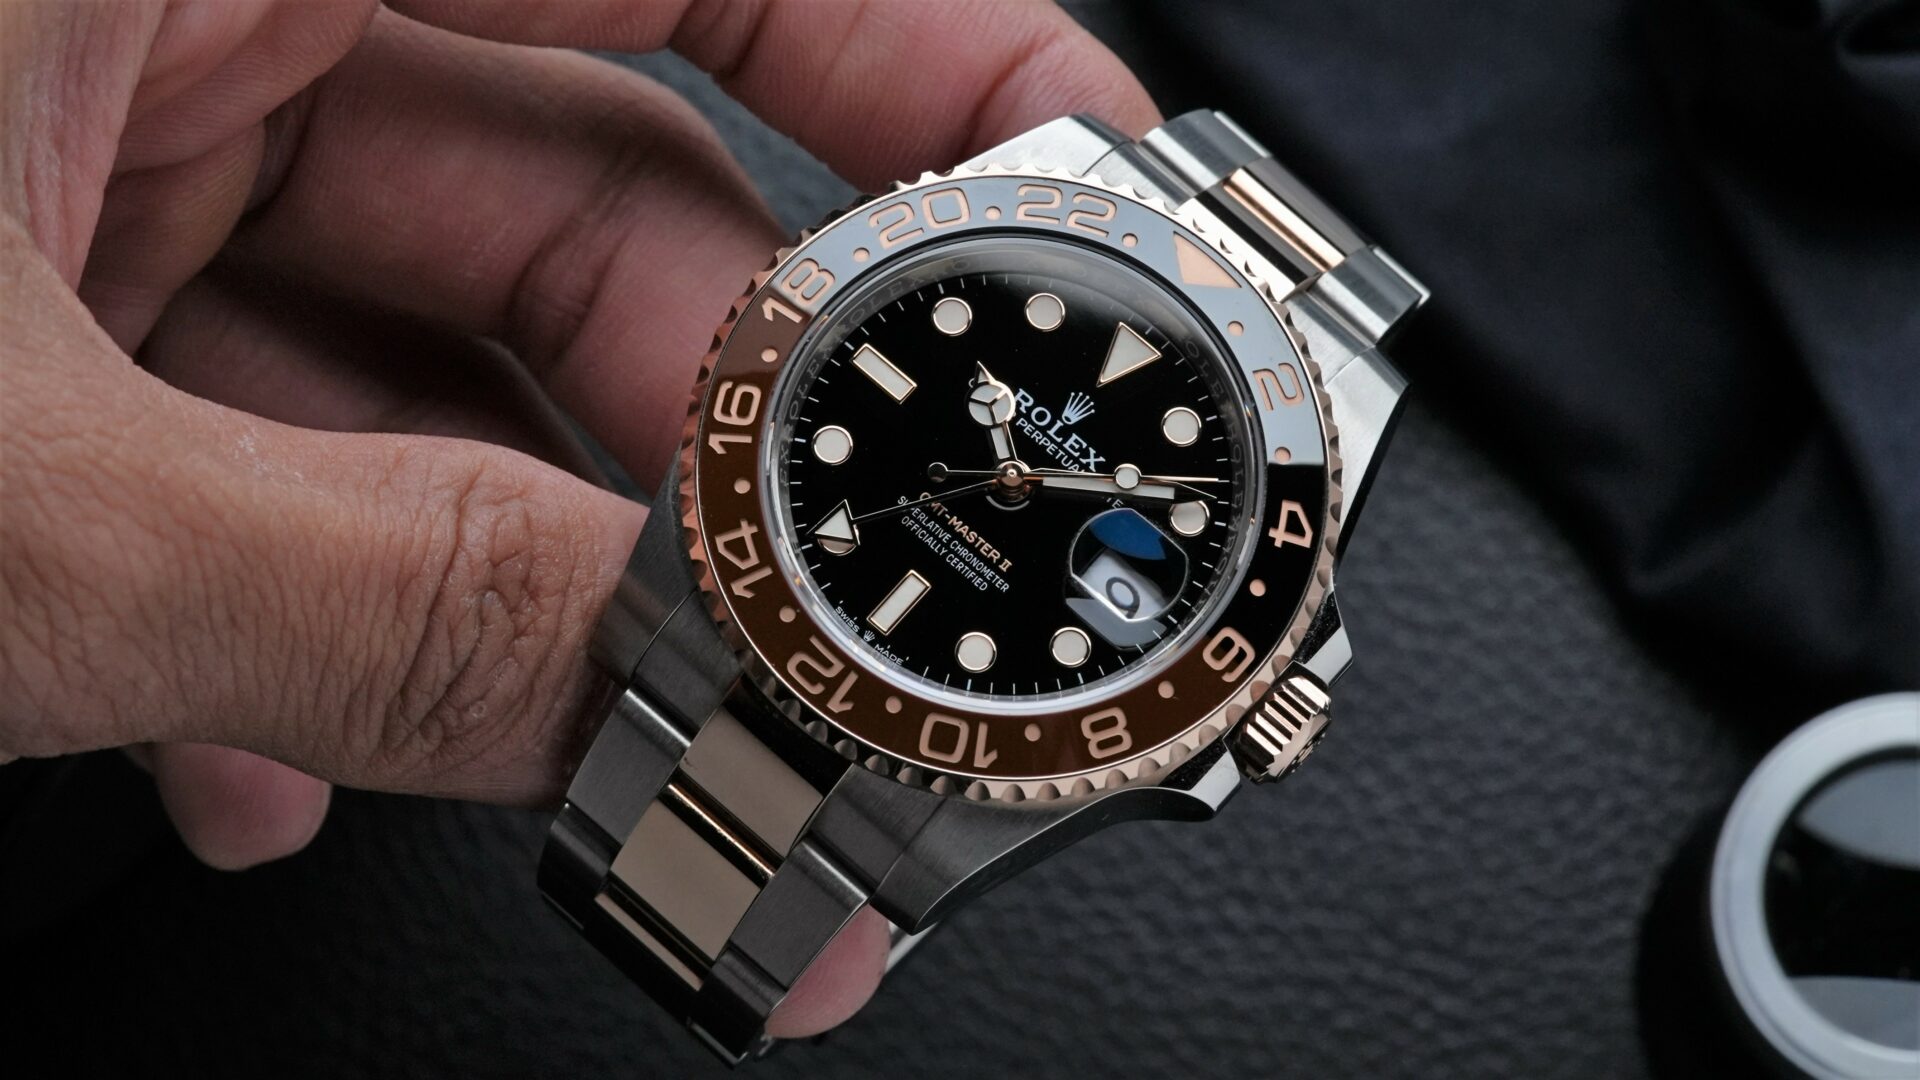 Rolex GMT-Master II Rootbeer Ceramic watch being held in hand.